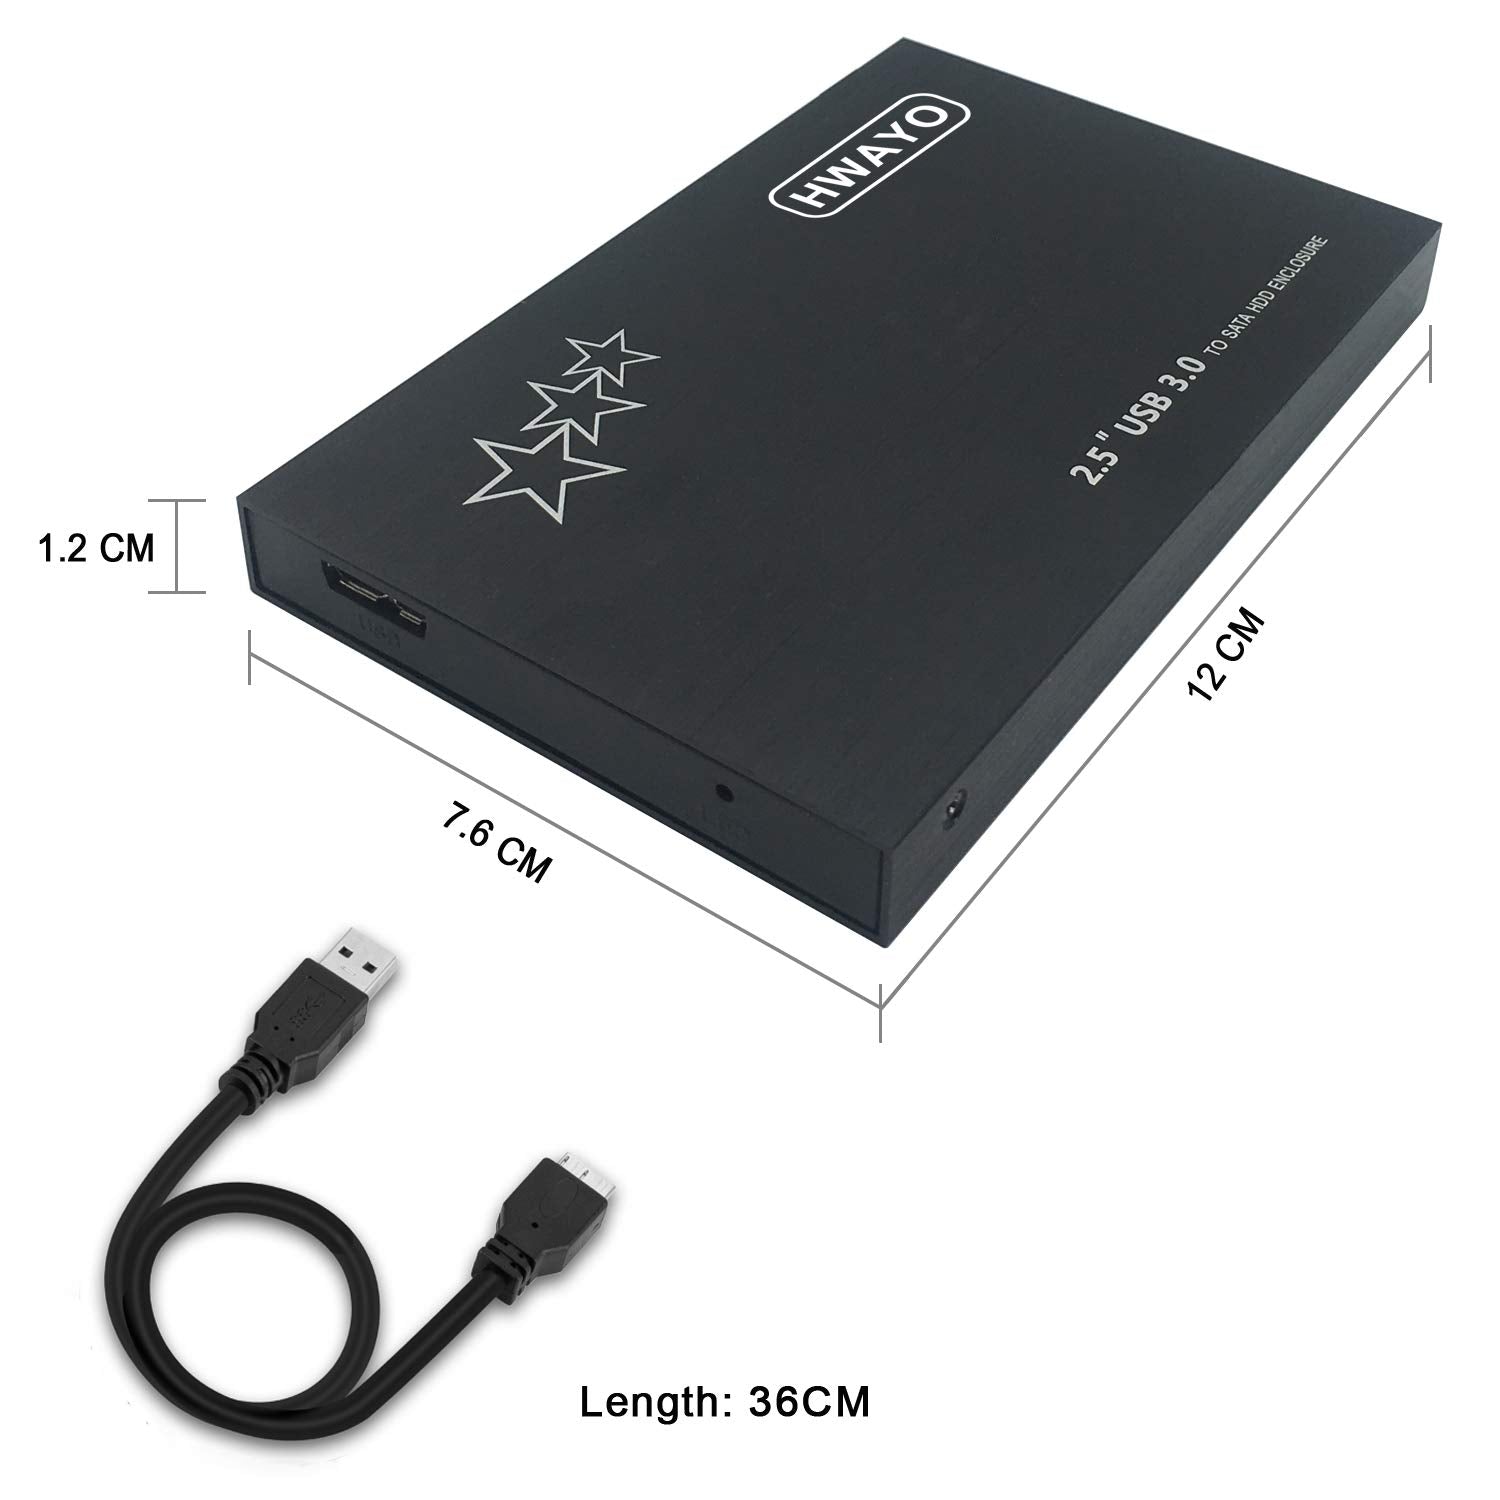 1TB External Hard Drive Portable - HWAYO 2.5'' Ultra Slim HDD Storage USB 3.0 for PC, Laptop, Mac, Chromebook (Black)